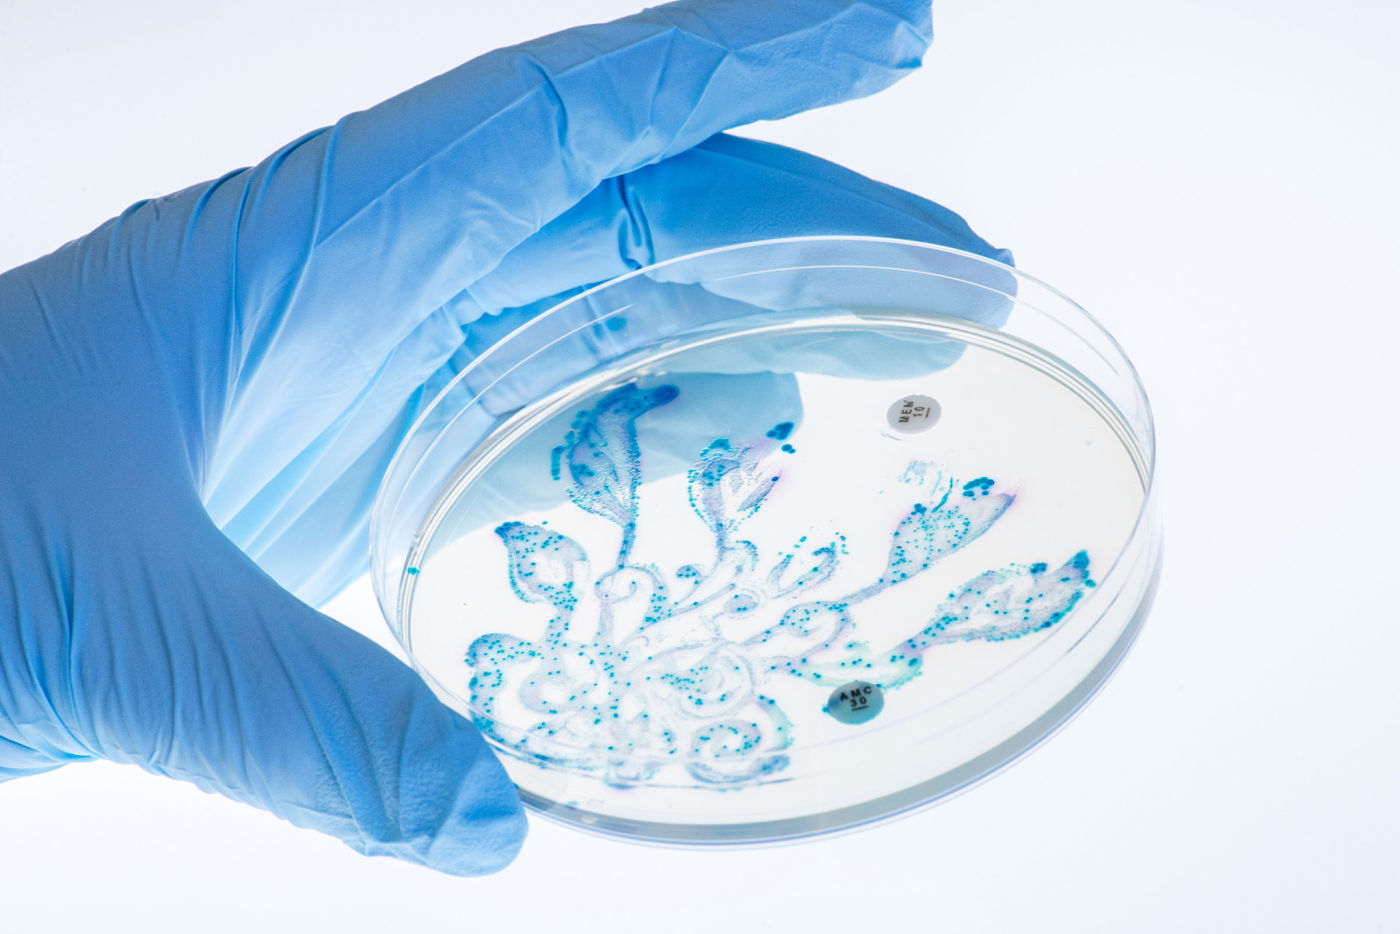 Microbe artwork shows the limits of antibiotics